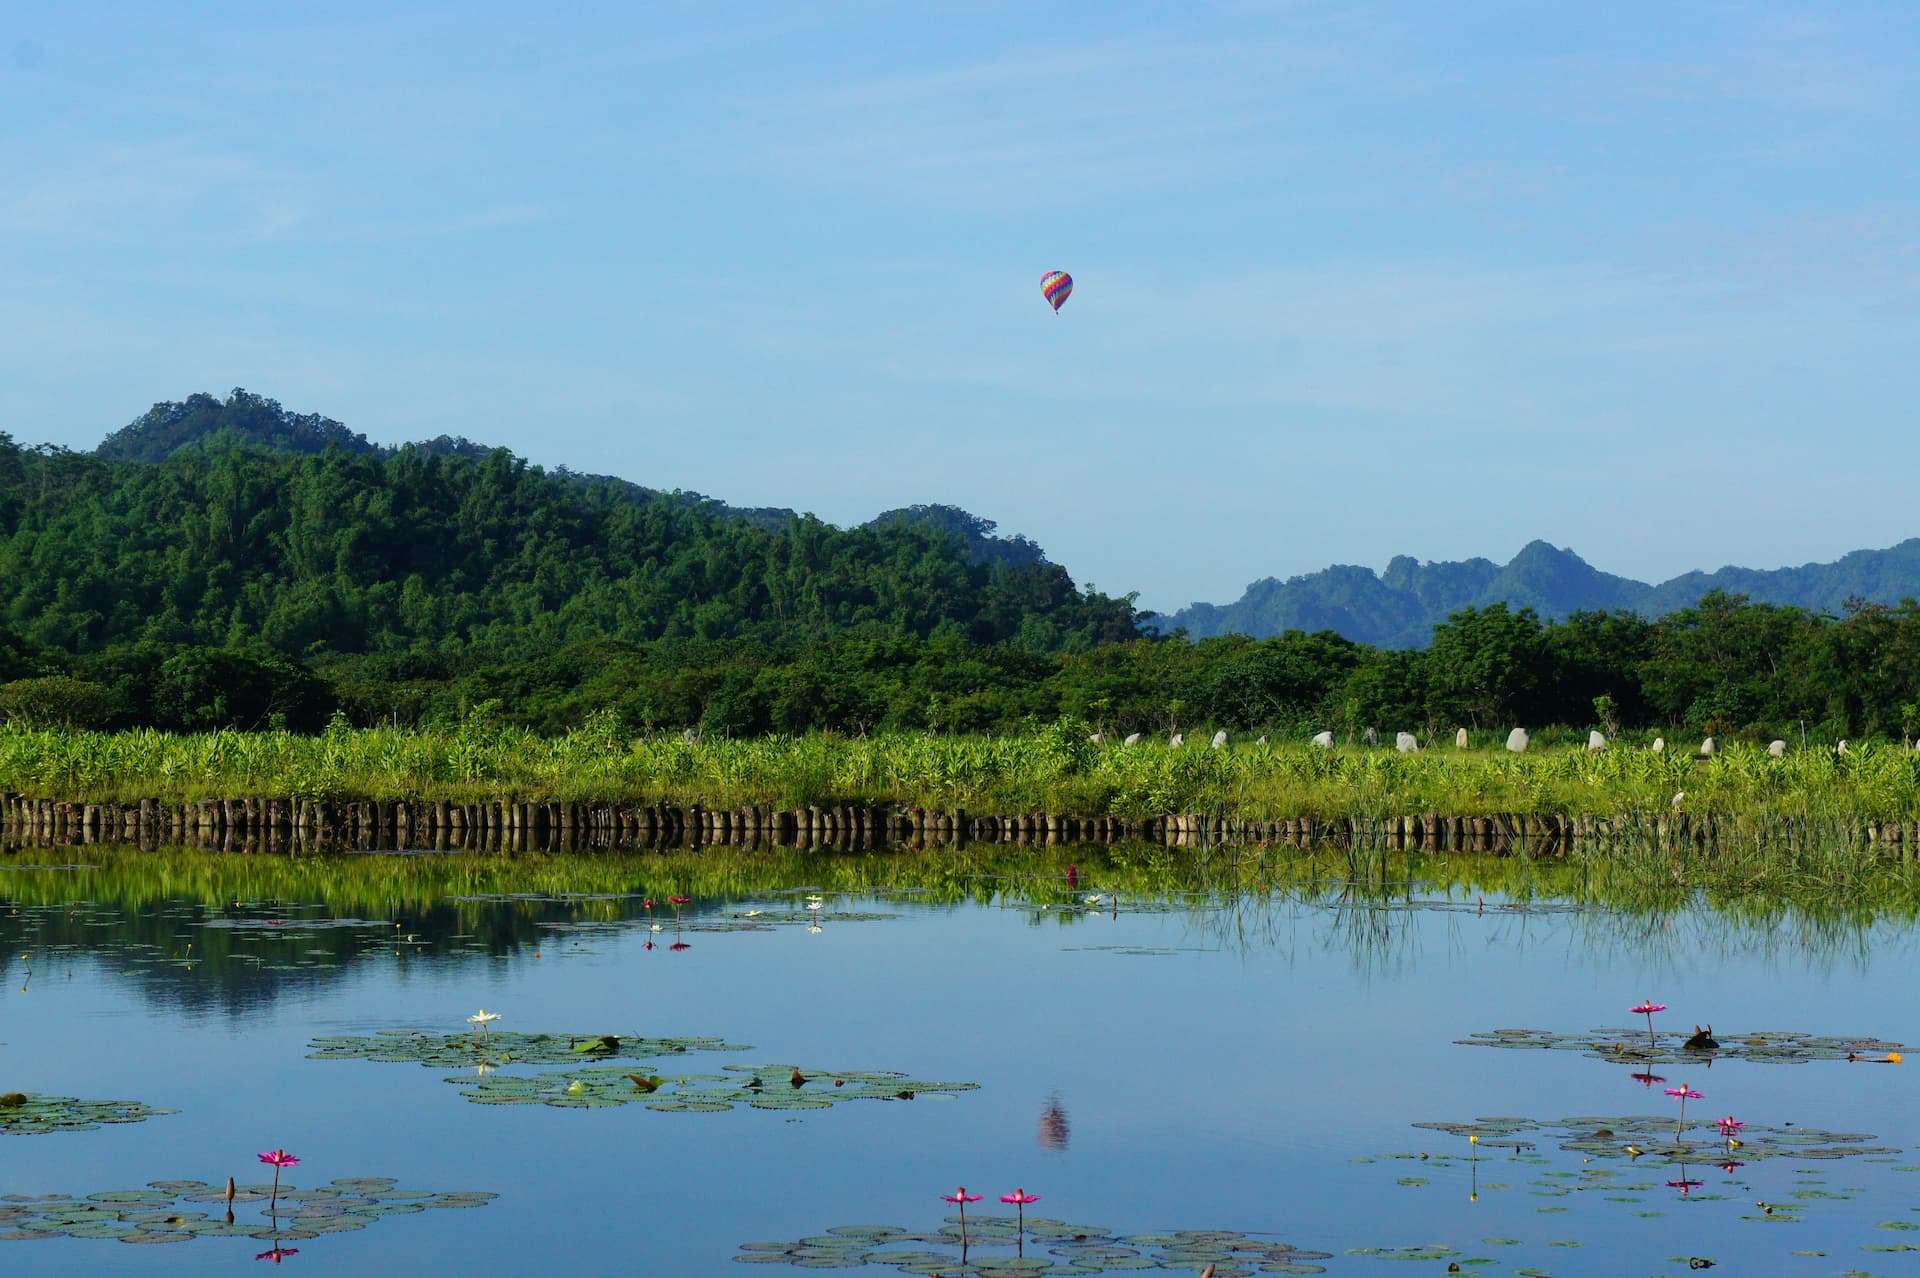 3rd Stop: Luye Healing Views - Xinliang Wetlands